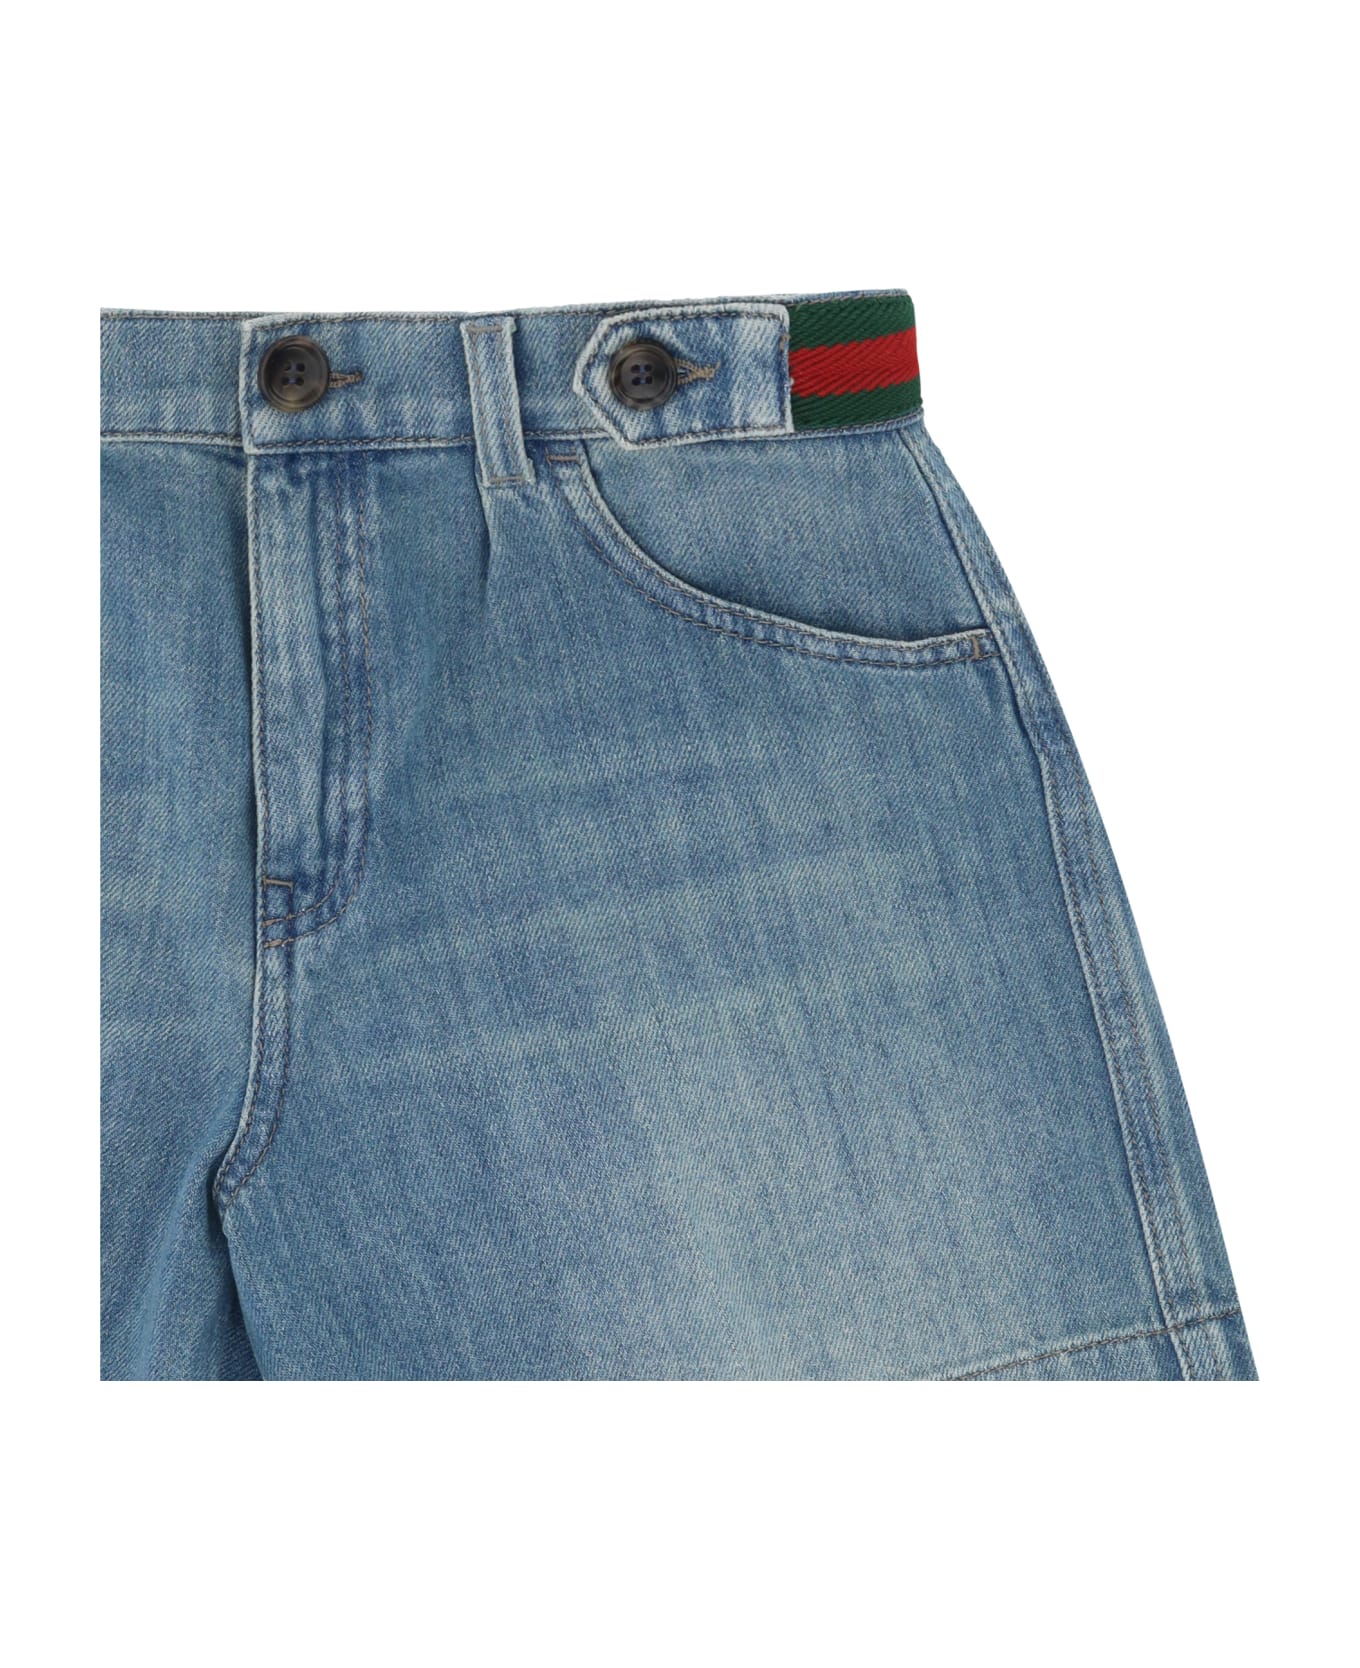 Gucci Bermuda Shorts For Boy - Blue/mix